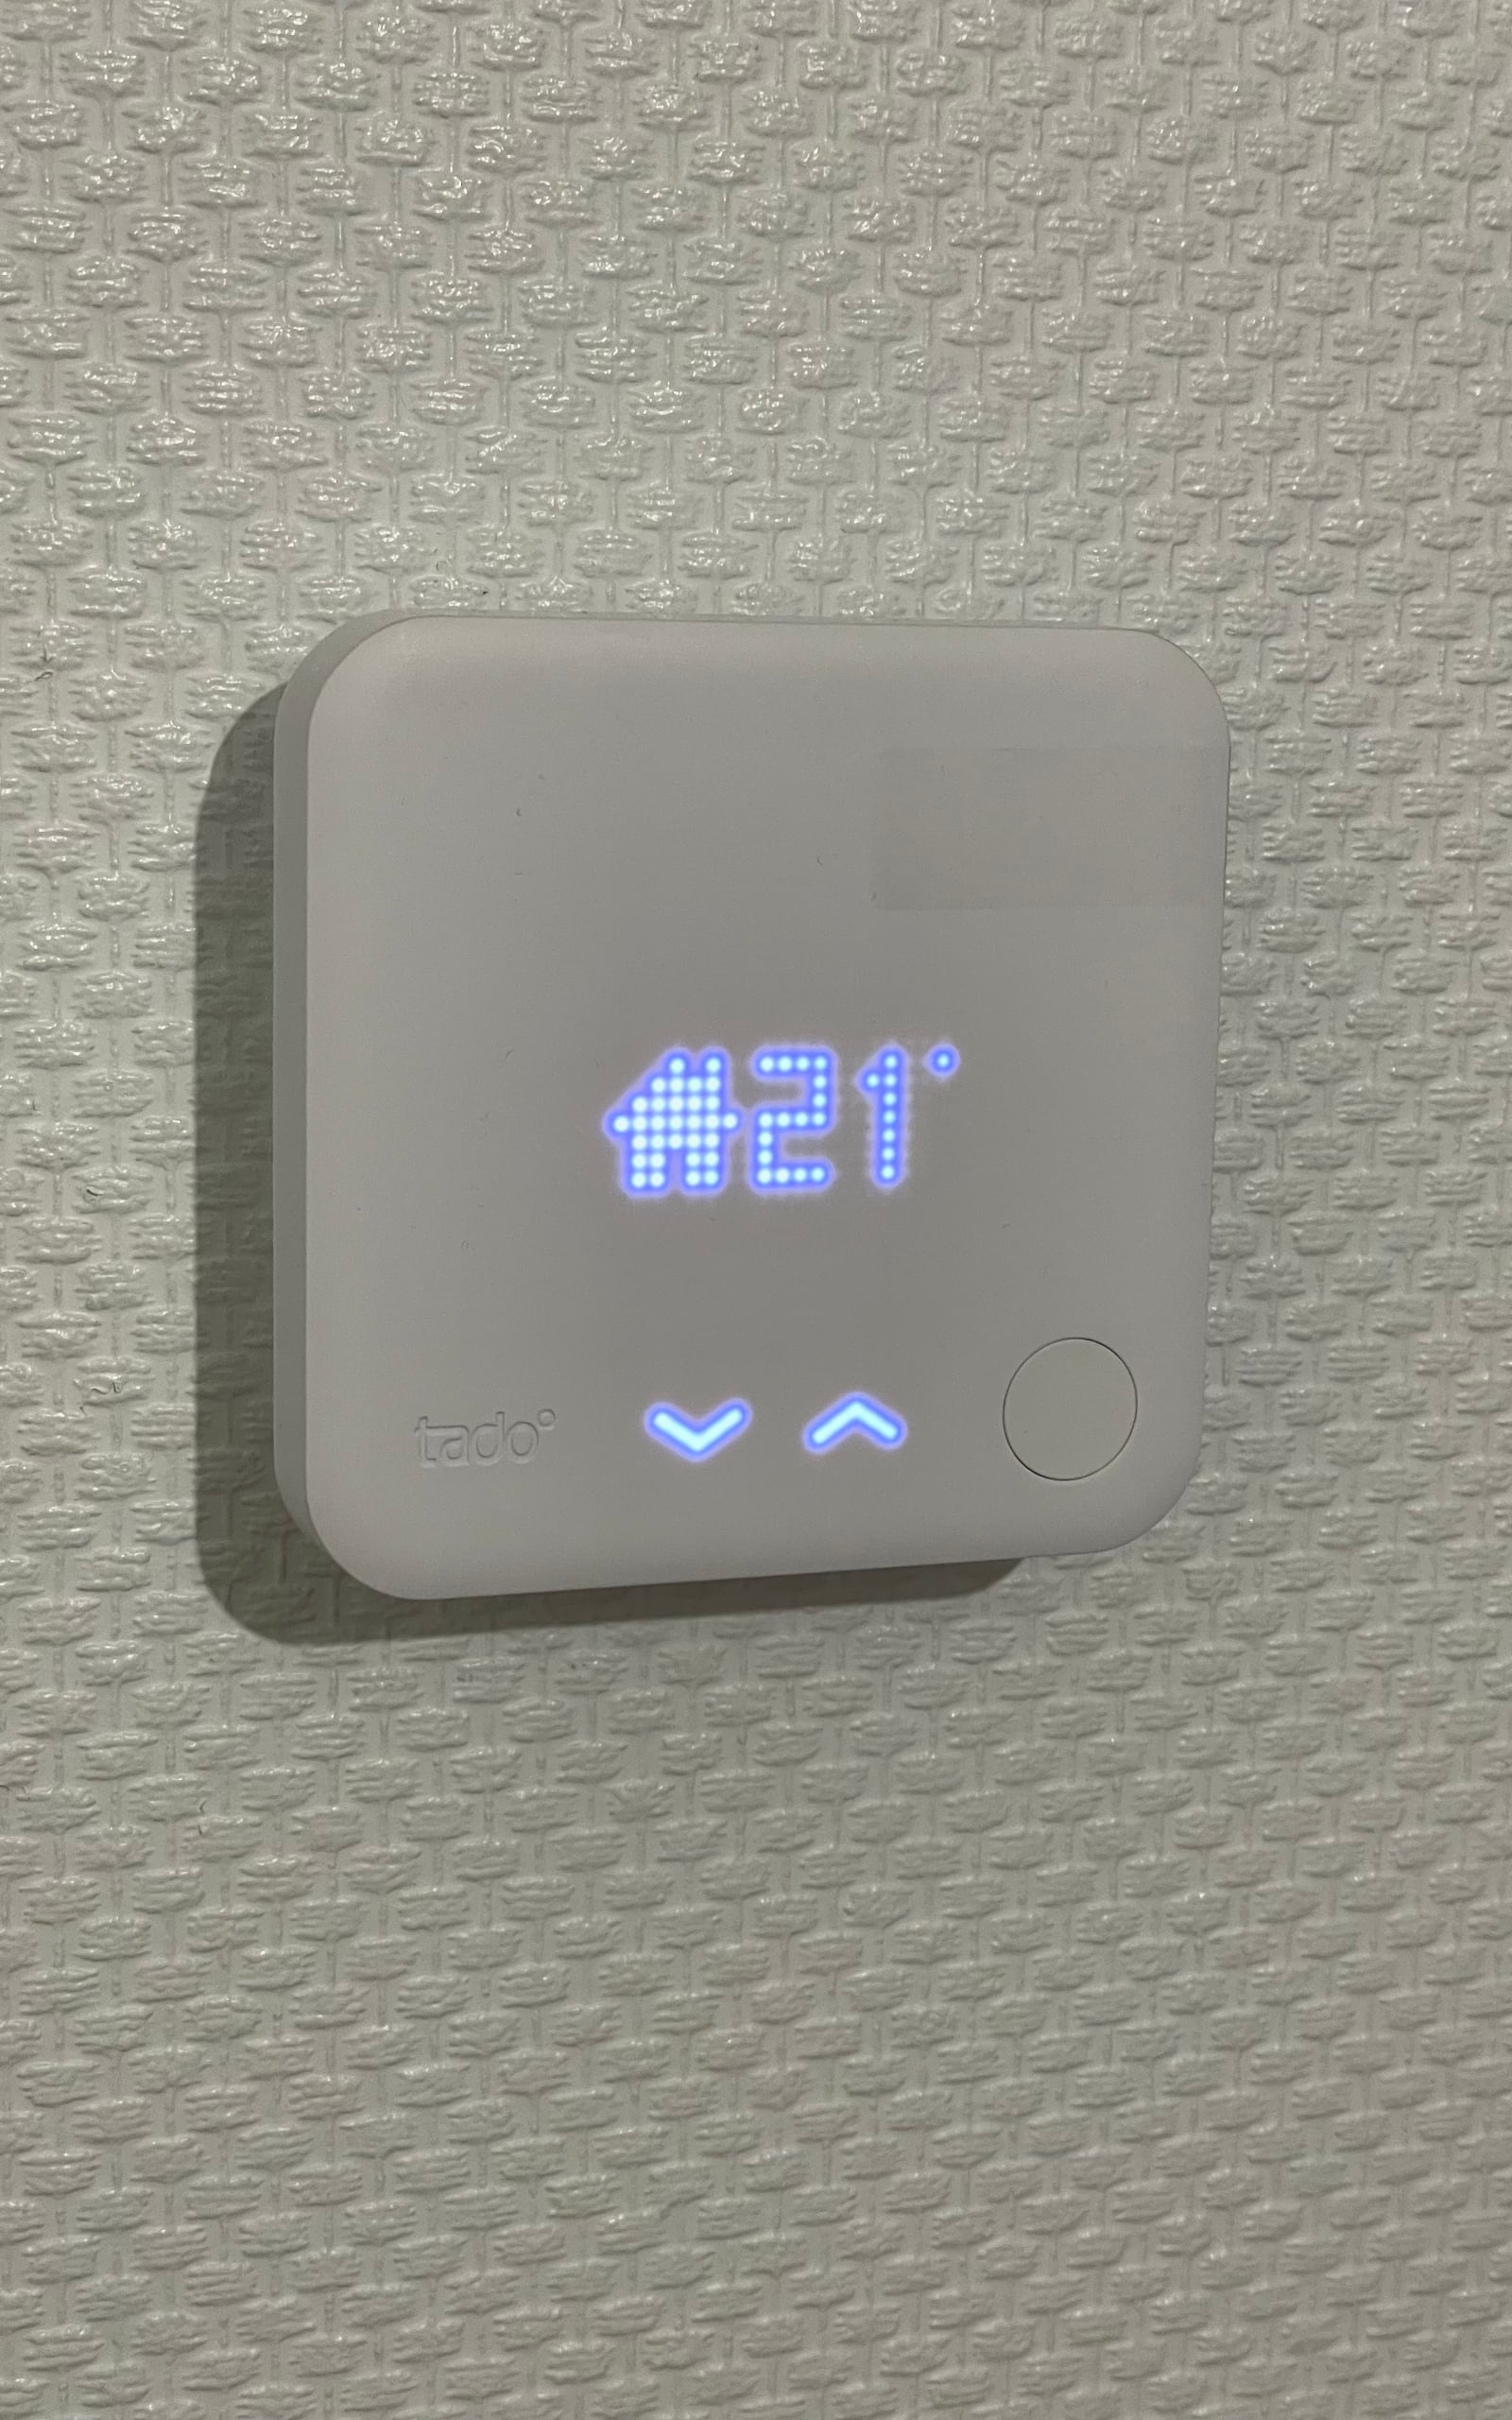 Das neue smarte Thermostat von tado.